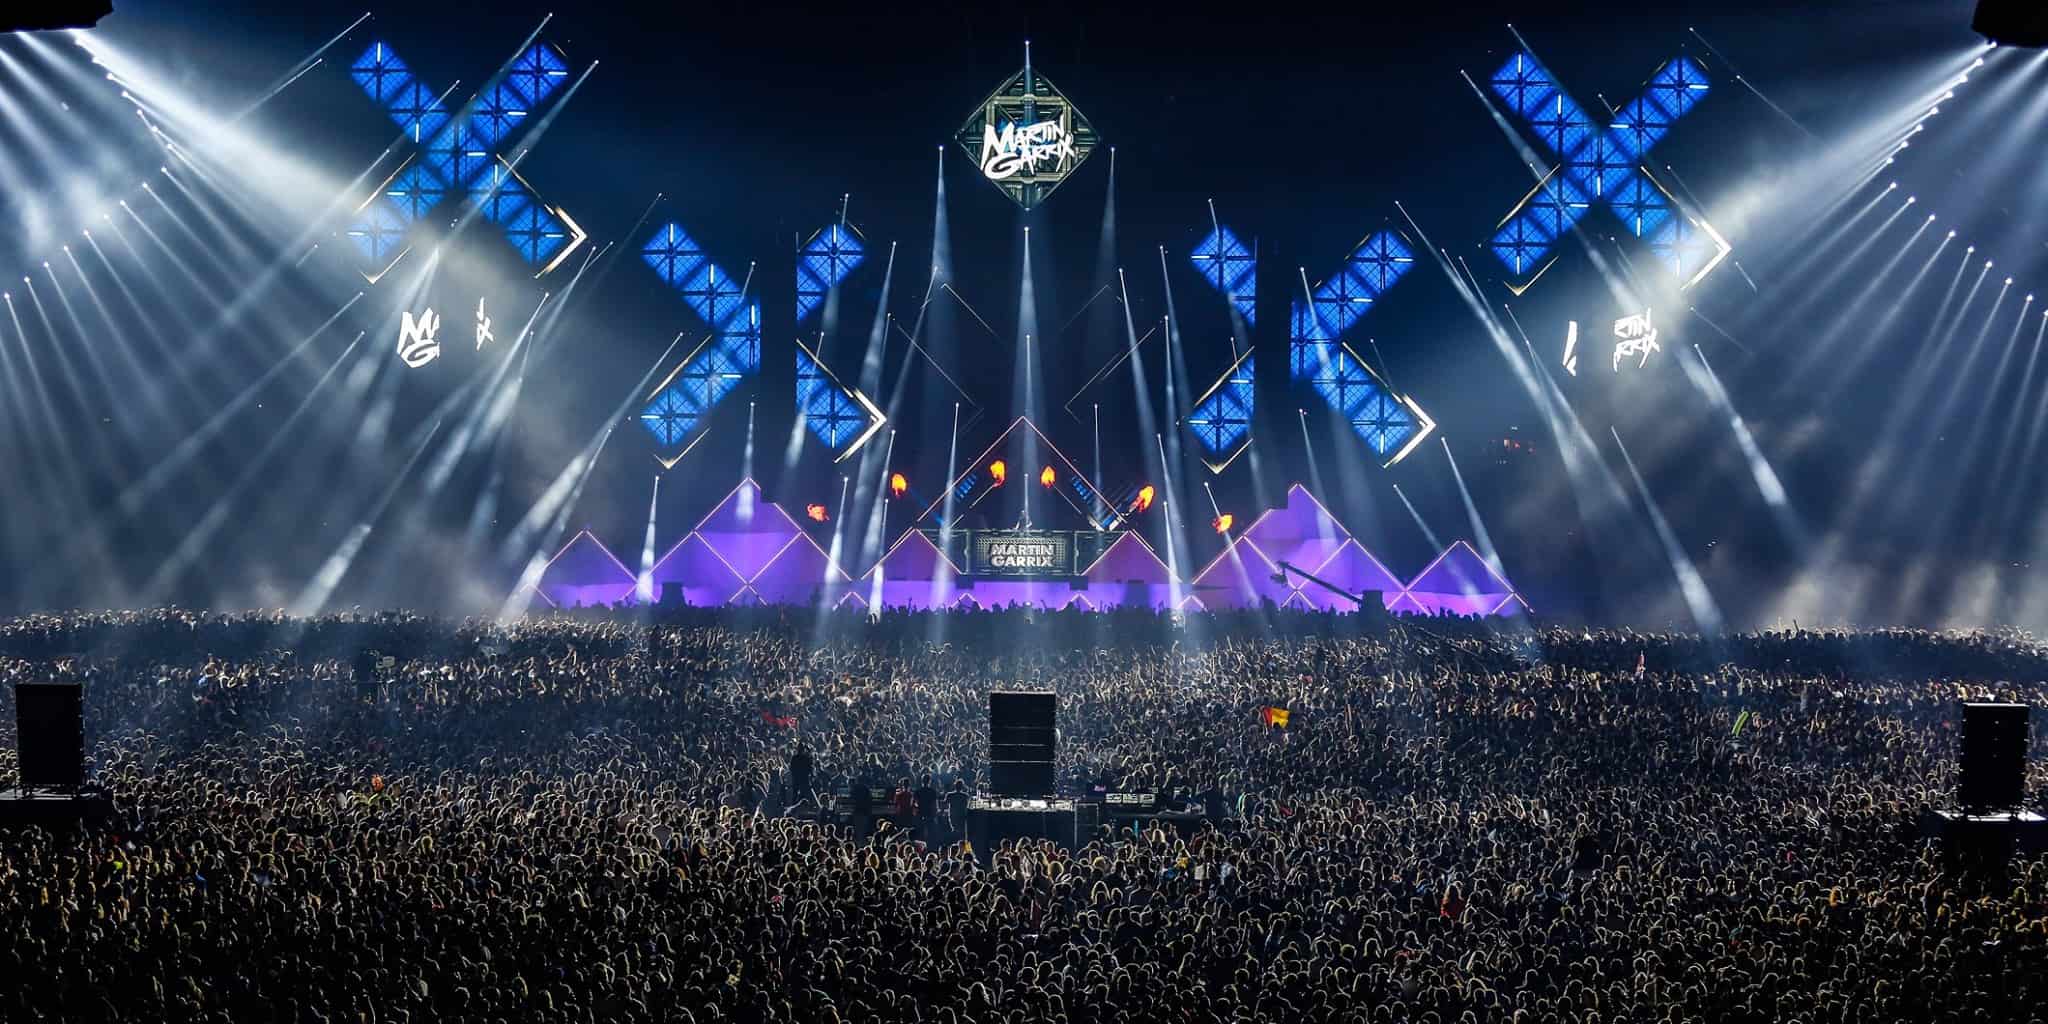 Top 100 DJs Awards 2021 show announced for ADE